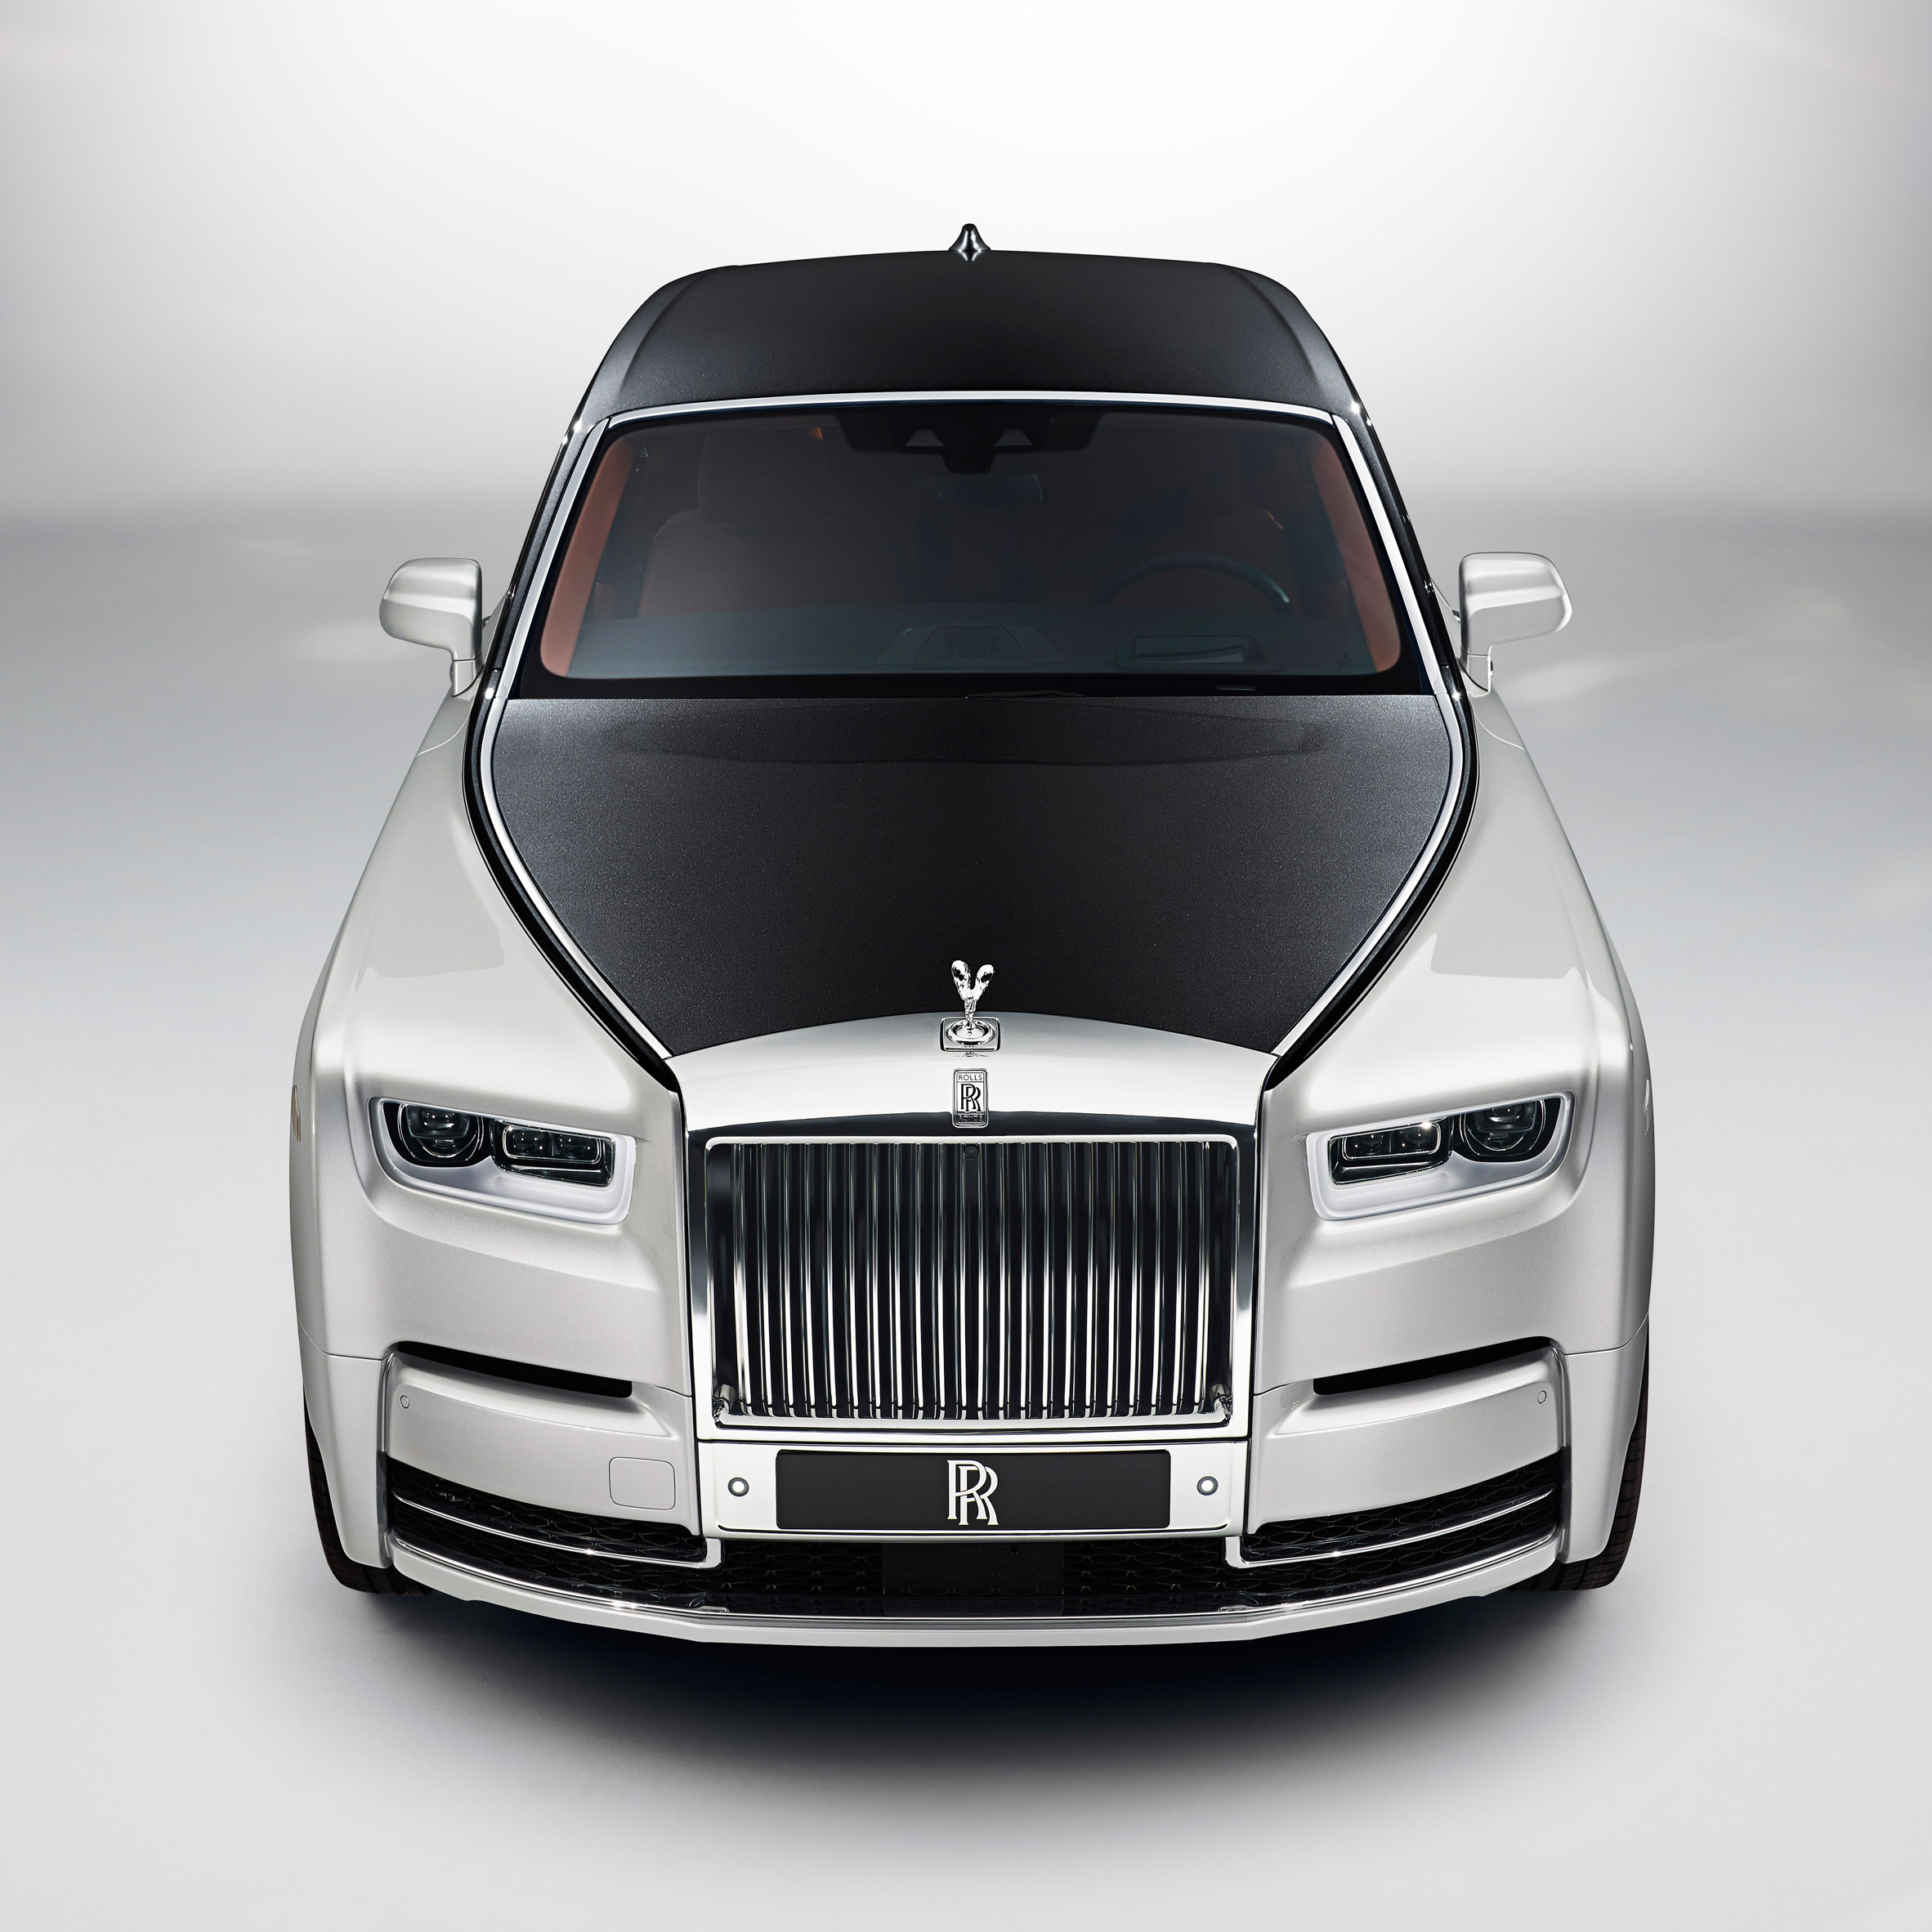 Latest Rolls-Royce Phantom incorporates an art gallery in its